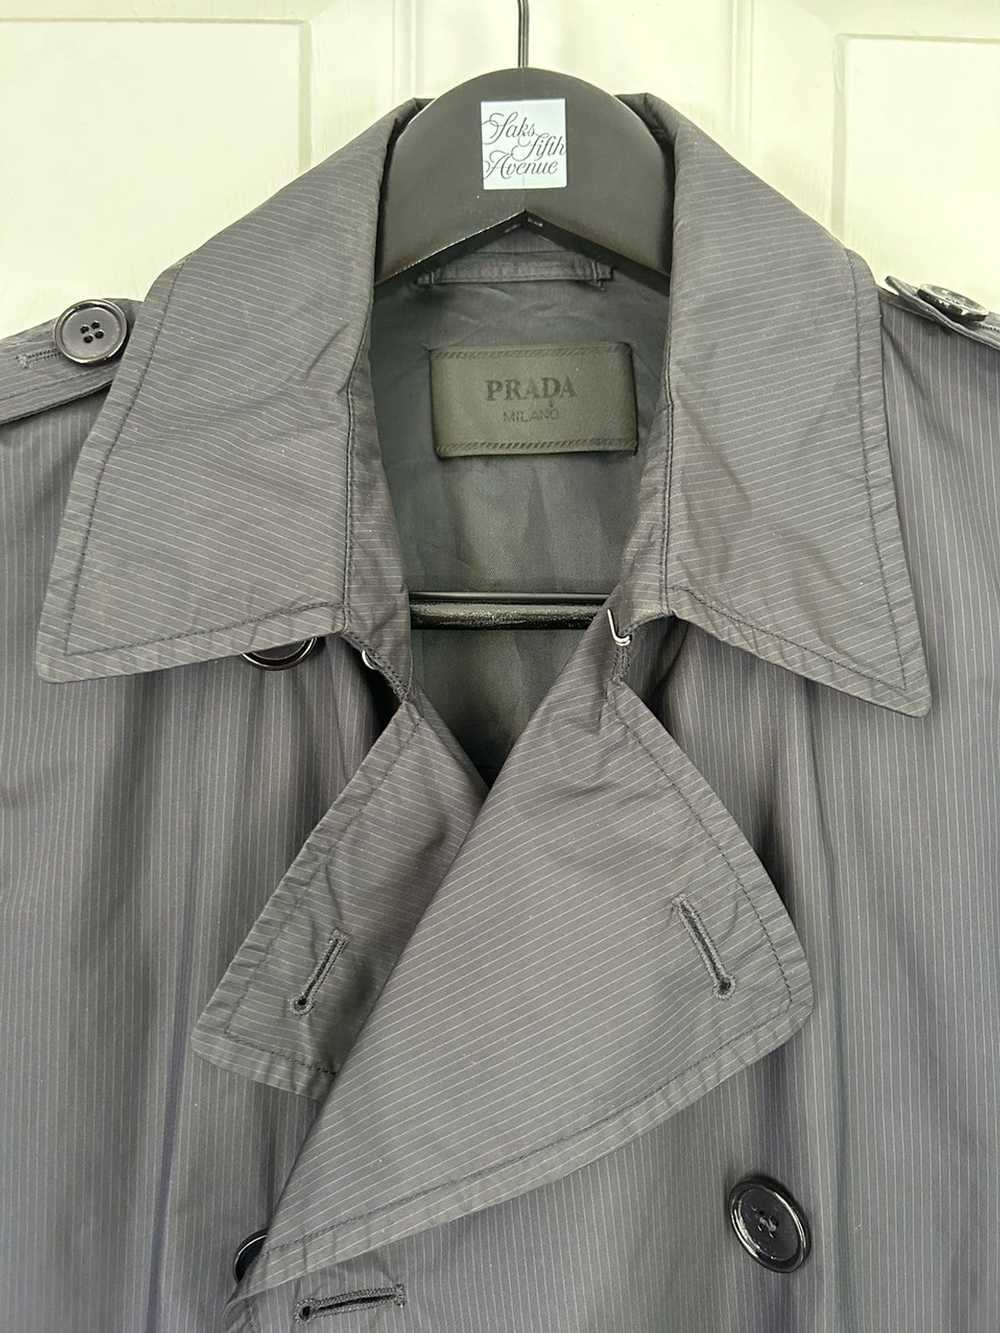 Prada Prada Raincoat Jacket - image 2